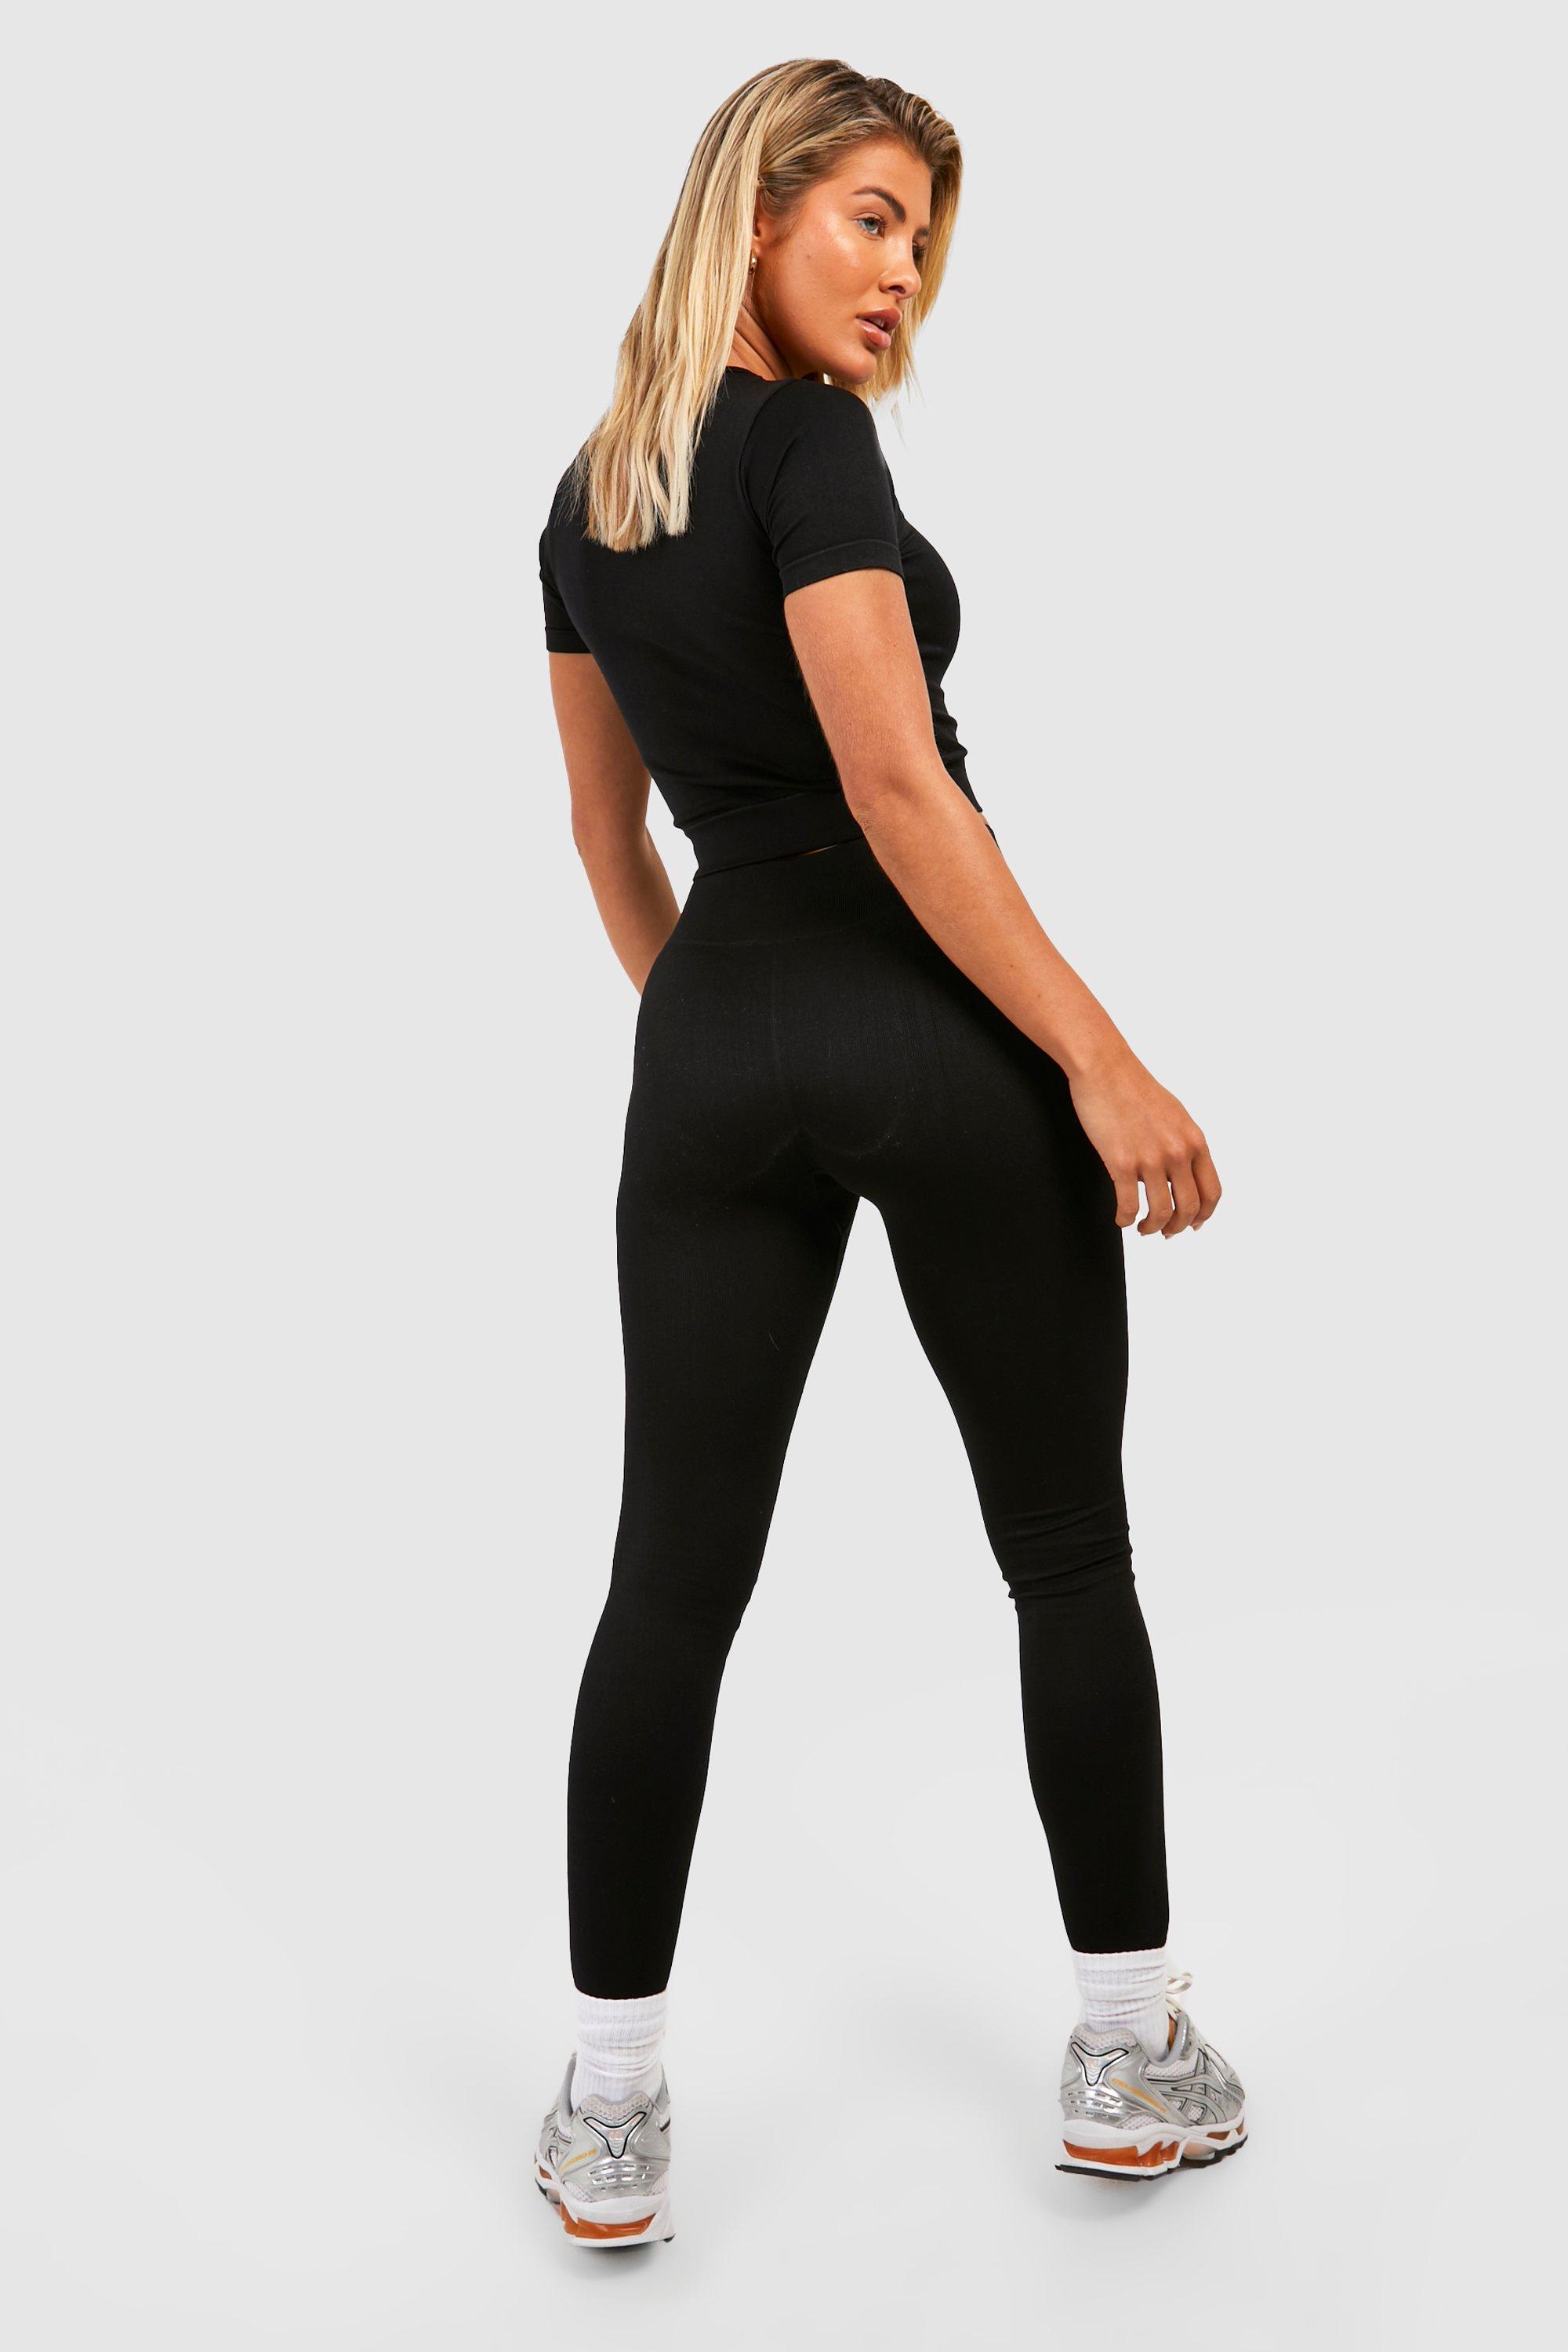 Bestel hier uw Zwart Rib Seamless Tights Seamless Hoge Taille, gebreide  legging, Naadloze, Yoga Workout Sets voor Vrouwen, Yoga Workout Sets voor  Vrouwen - Maat : M